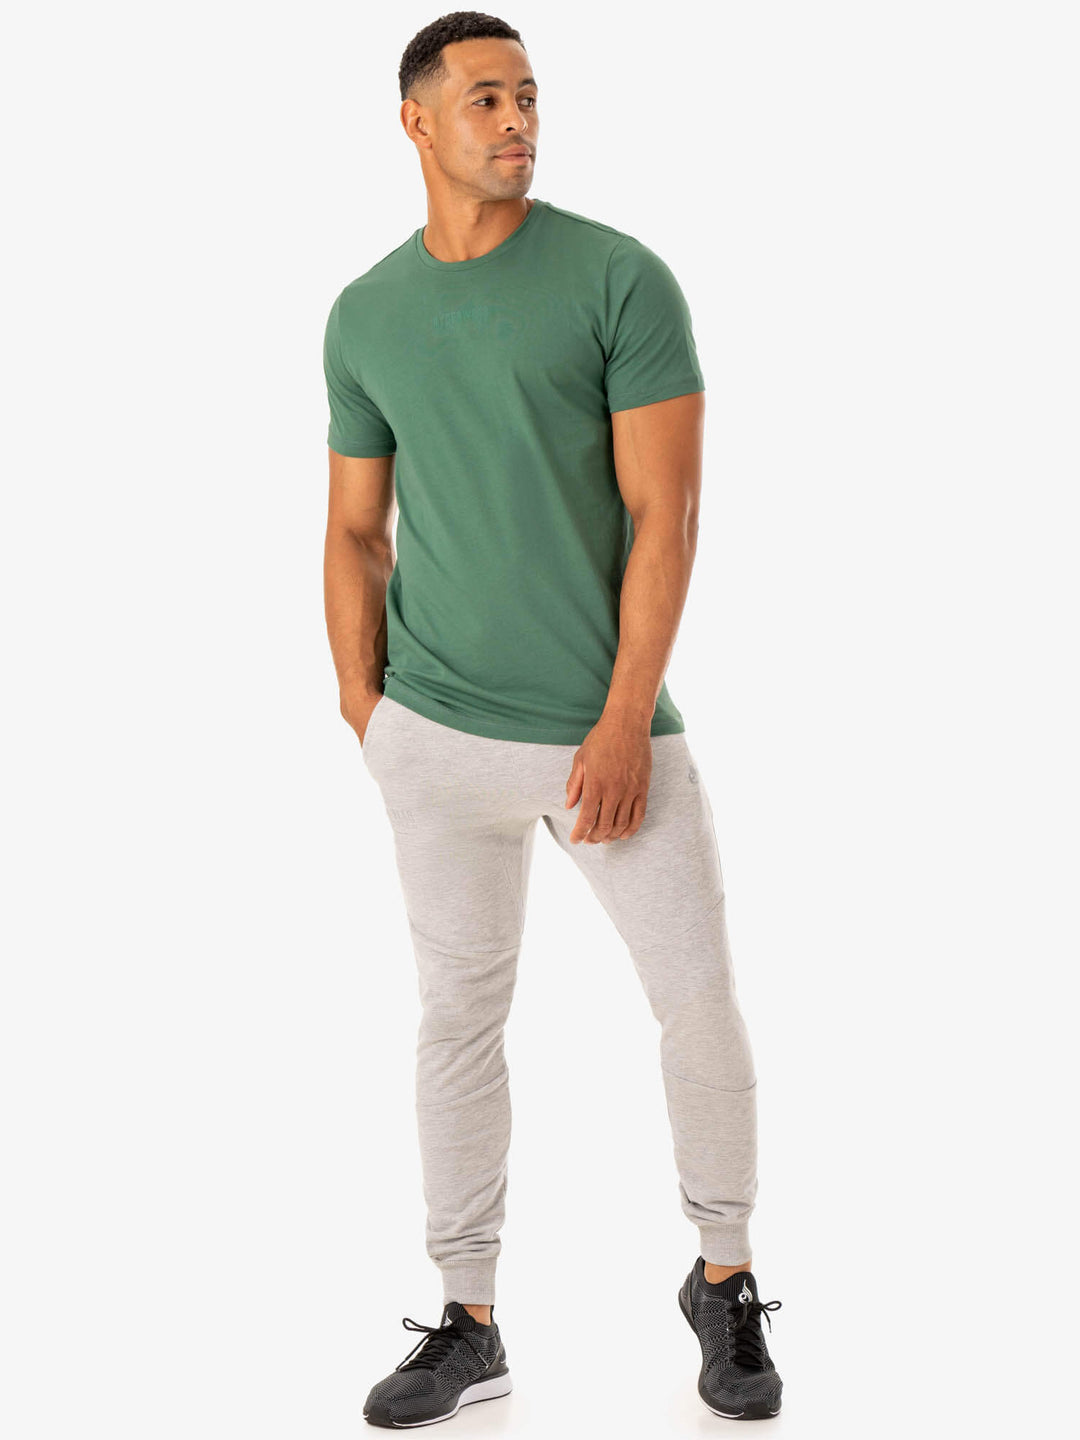 Limitless T-Shirt - Forest Green Clothing Ryderwear 